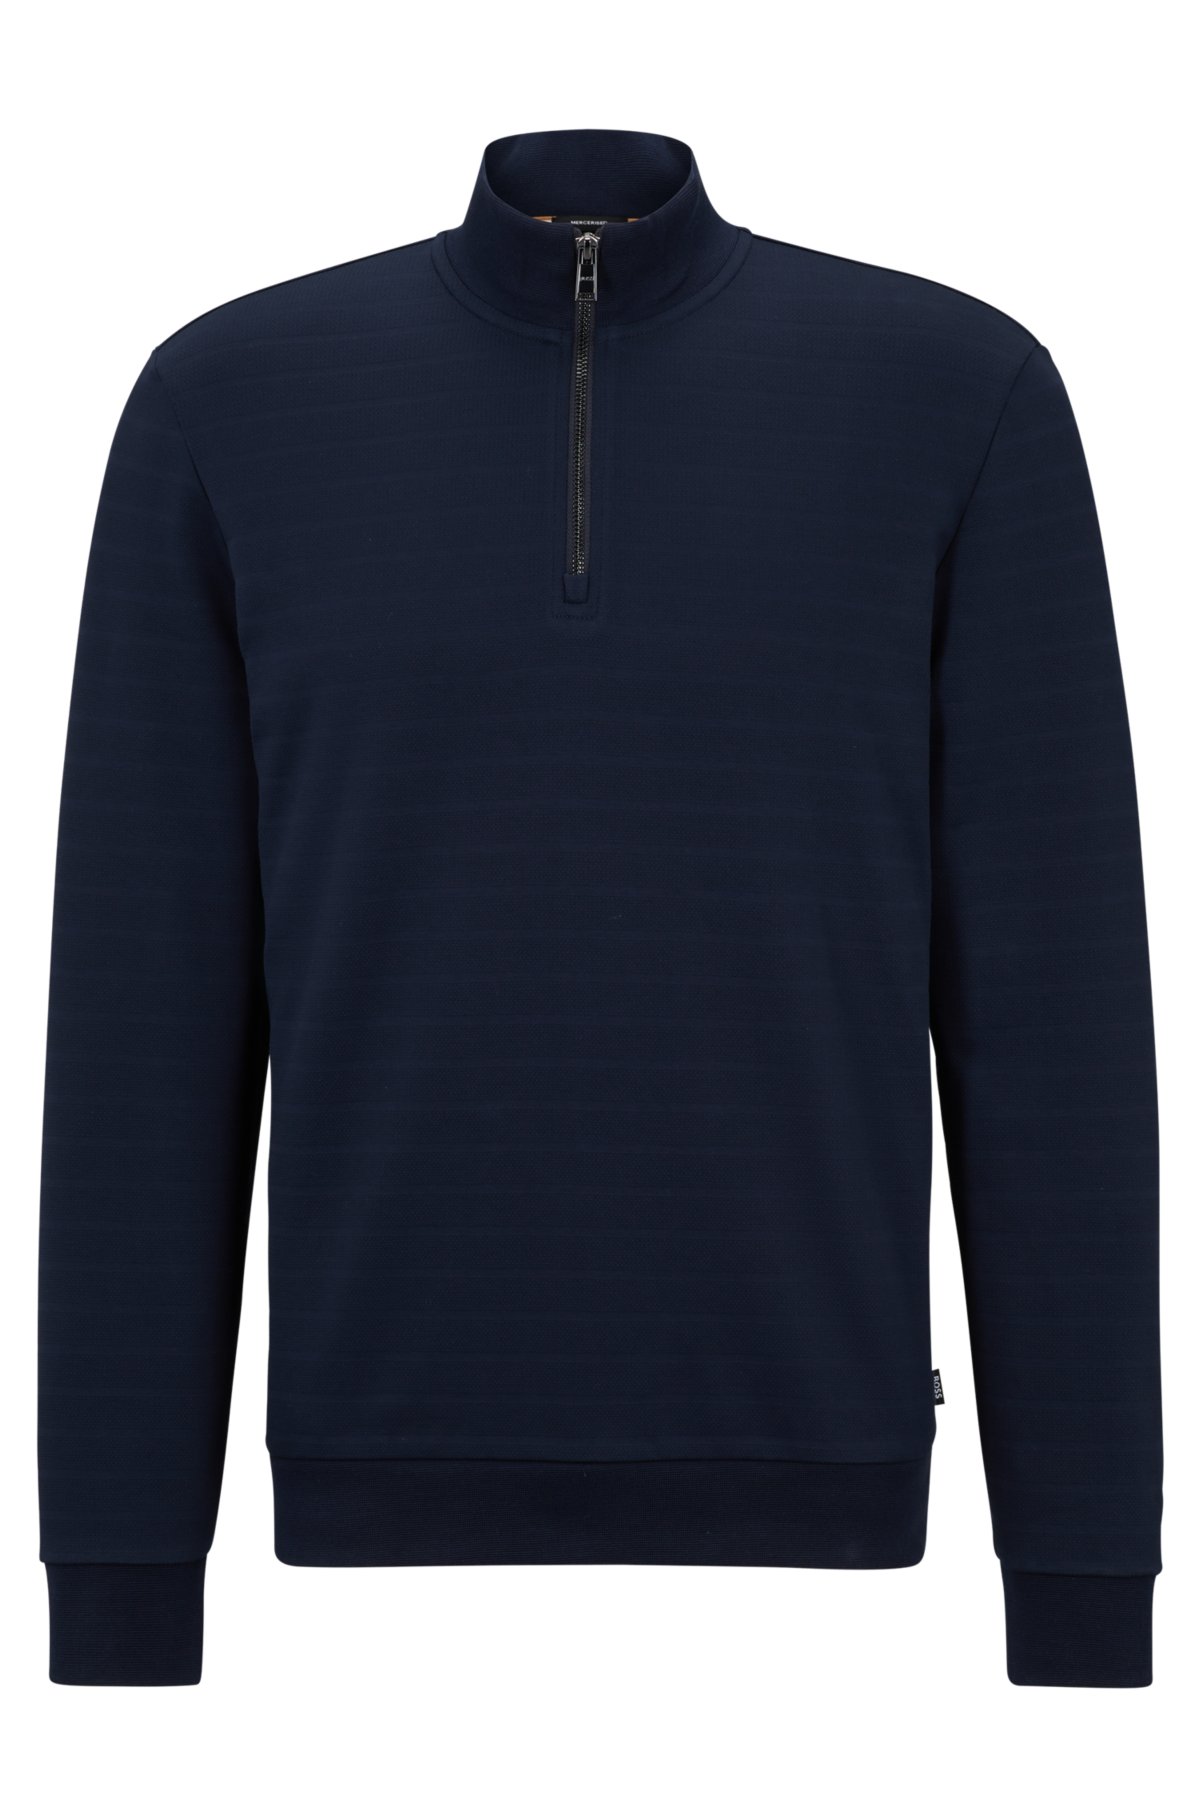 Zip-neck sweatshirt in mercerized cotton jacquard, Dark Blue